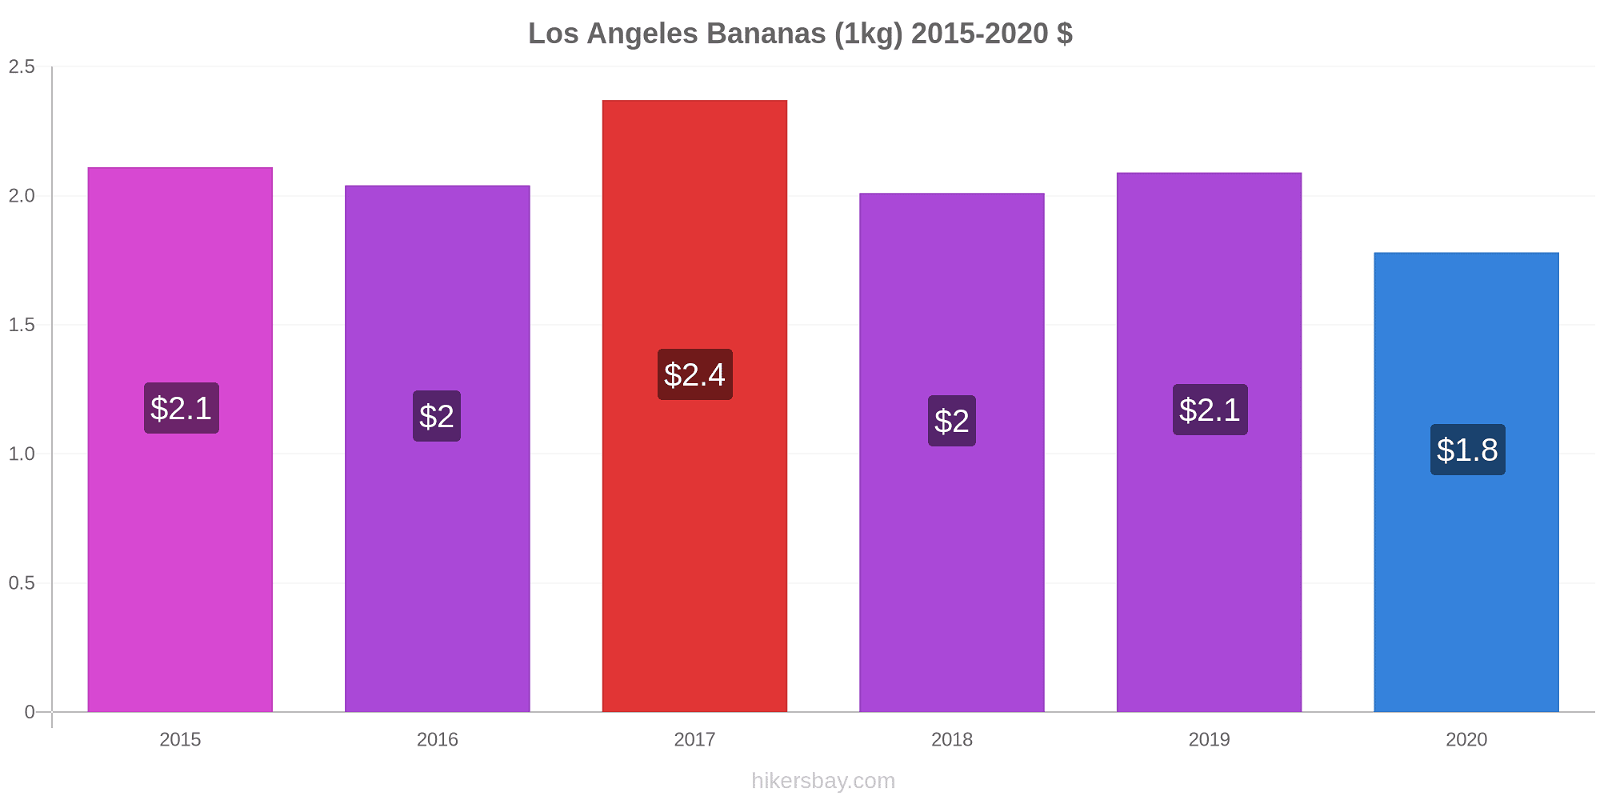 Los Angeles price changes Bananas (1kg) hikersbay.com